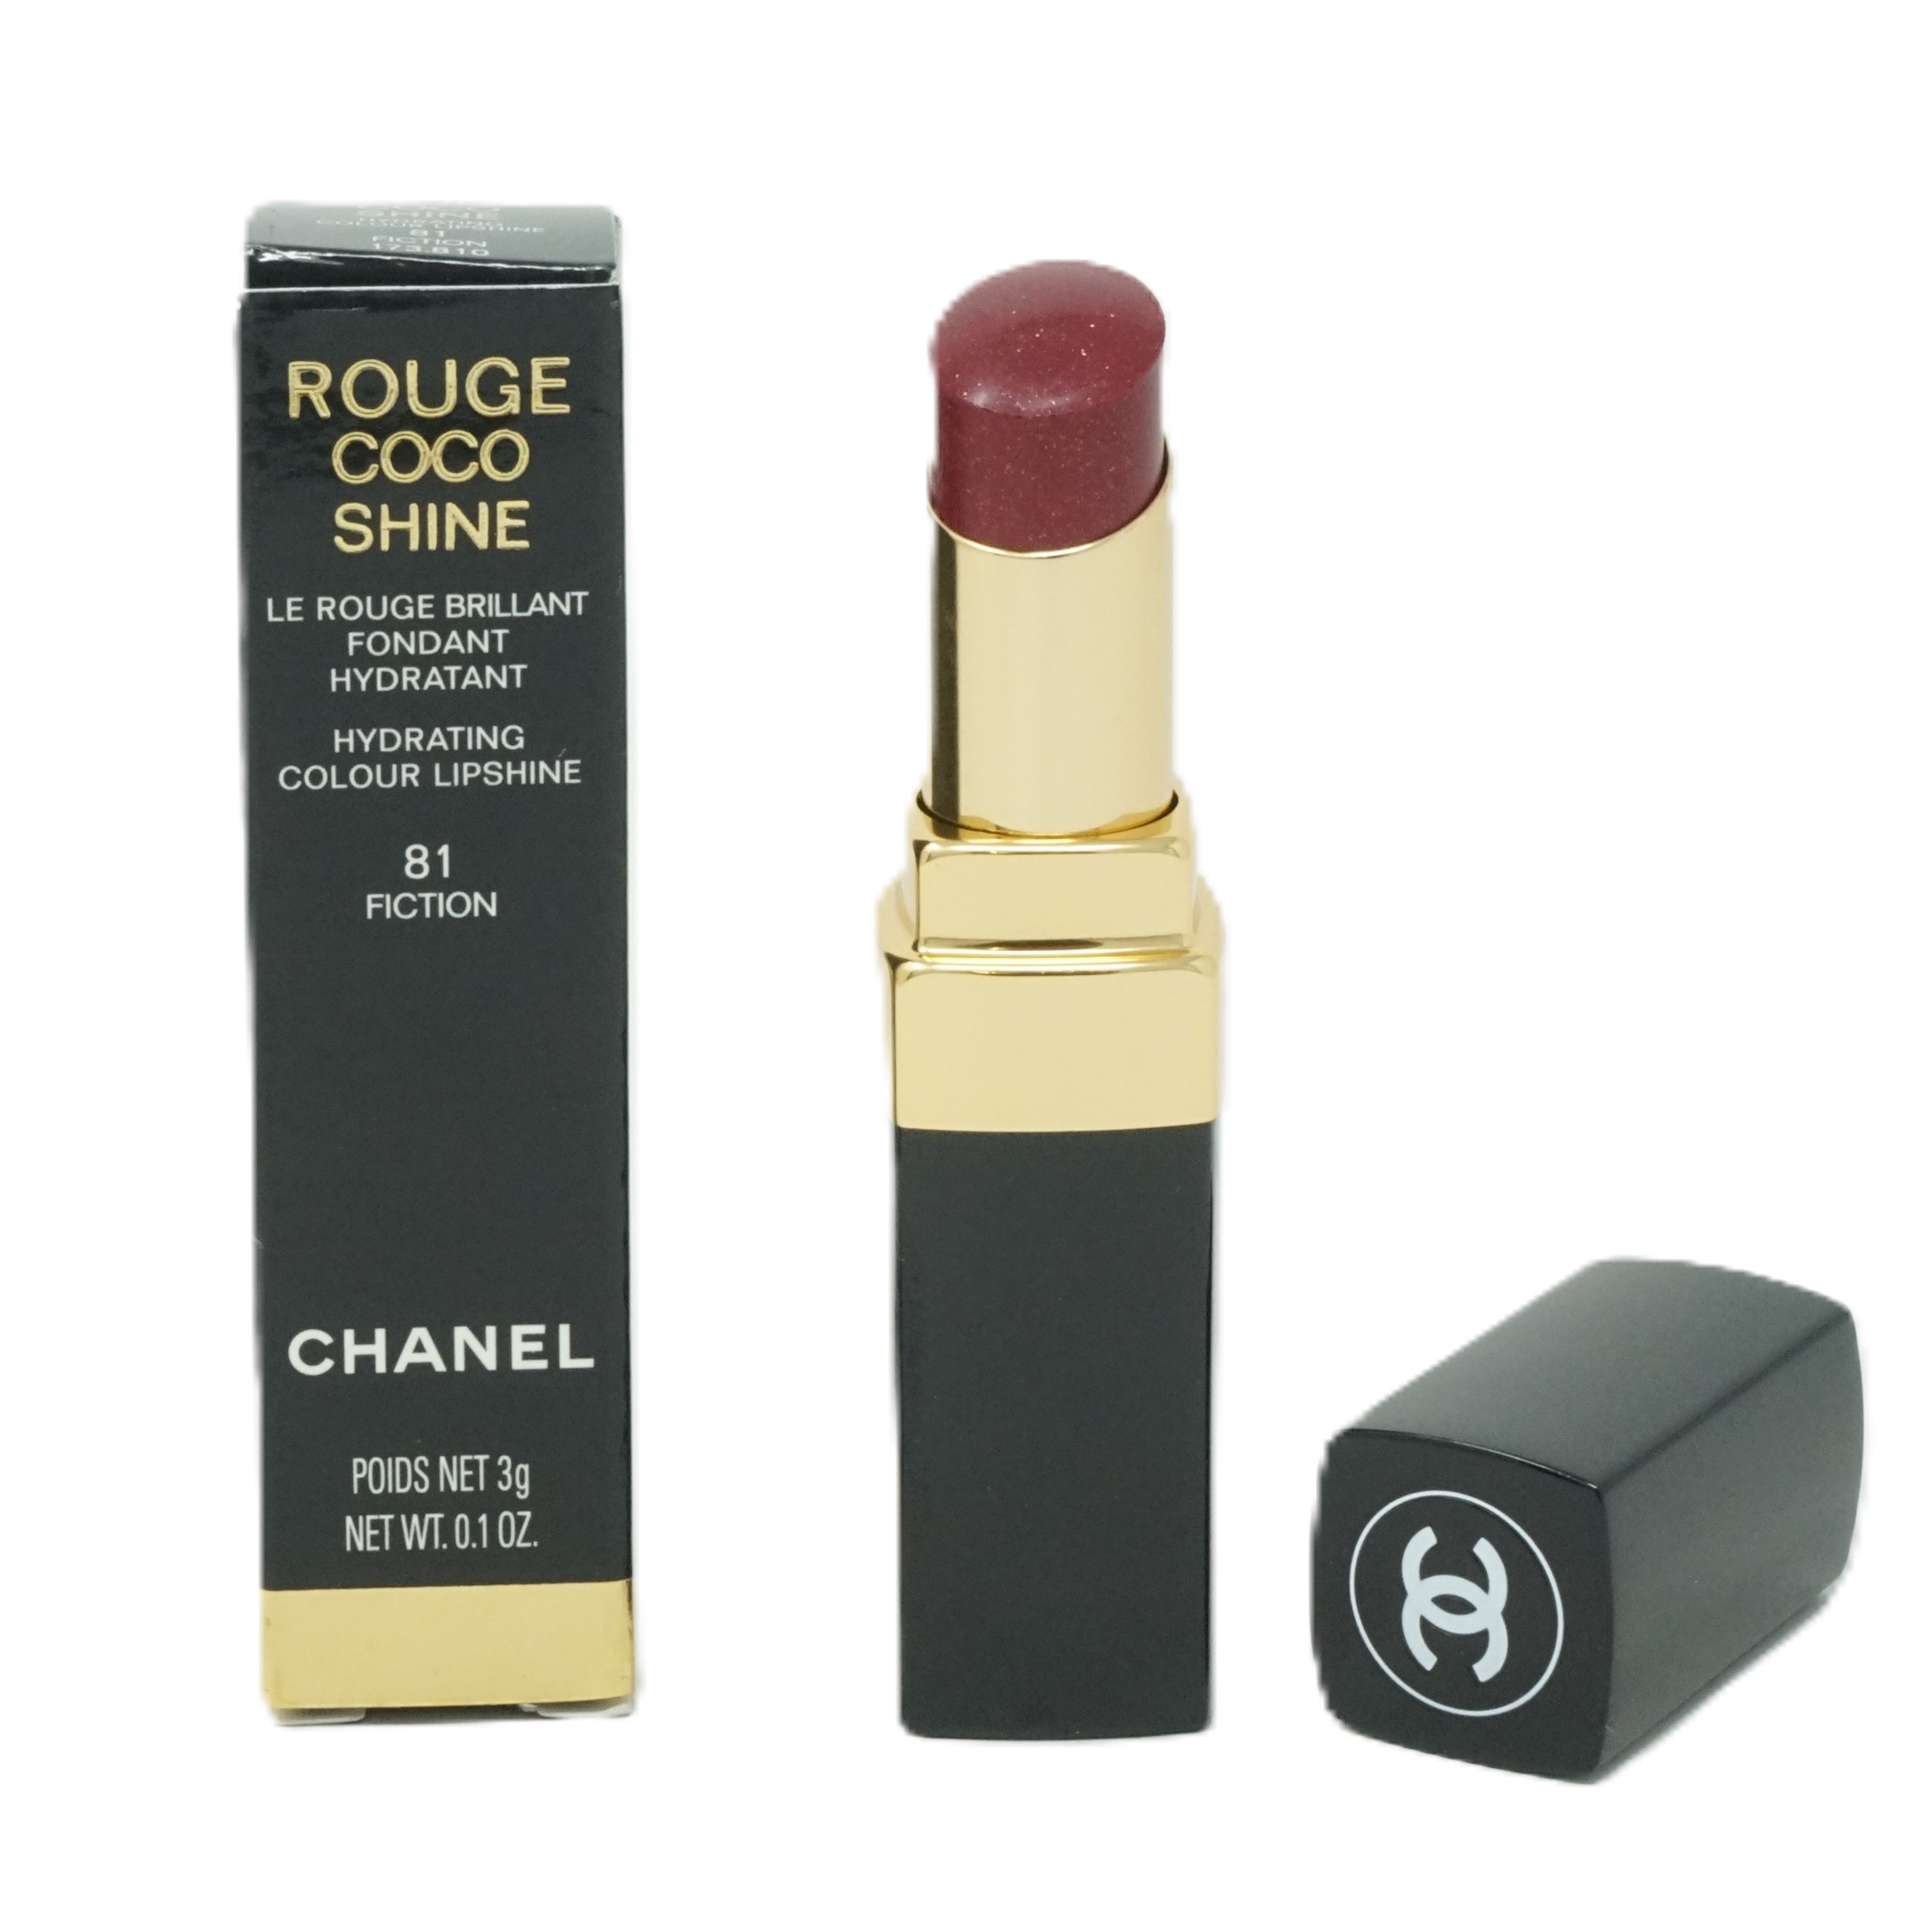 Chanel Rouge Coco Shine Lippenstift 3g Fiction 81